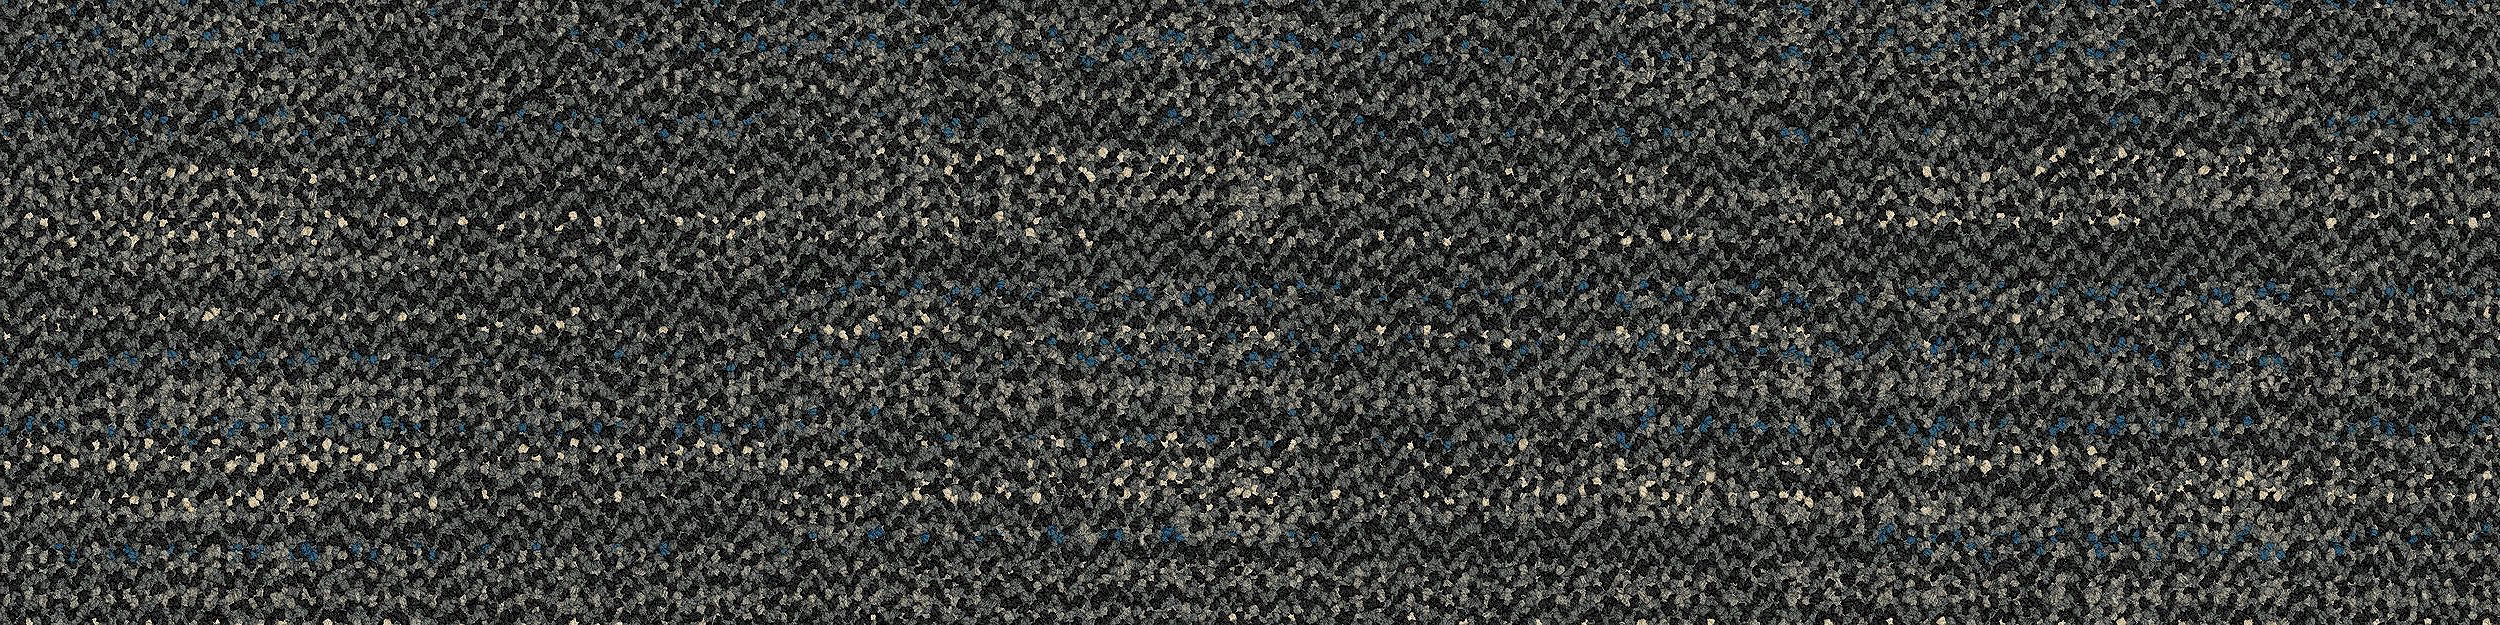 Bitrate Carpet Tile In Dark Aqua imagen número 7